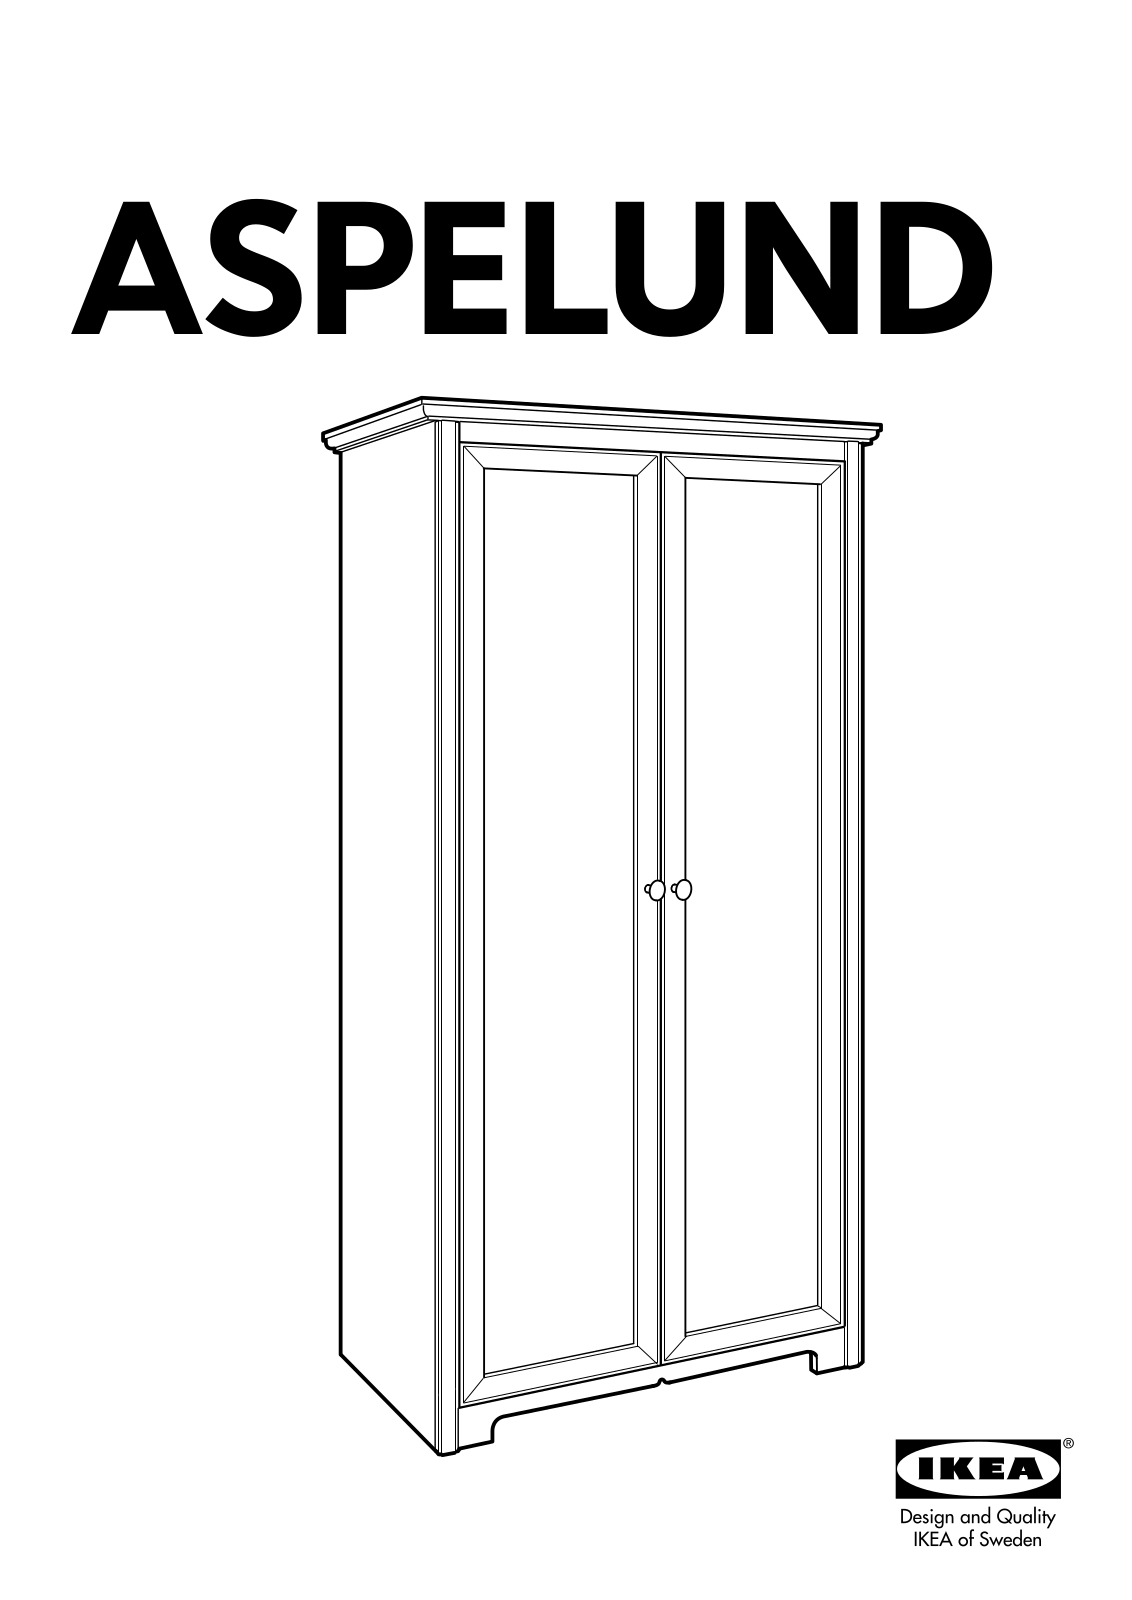 IKEA ASPELUND WARDROBE W- 2 DOORS Assembly Instruction